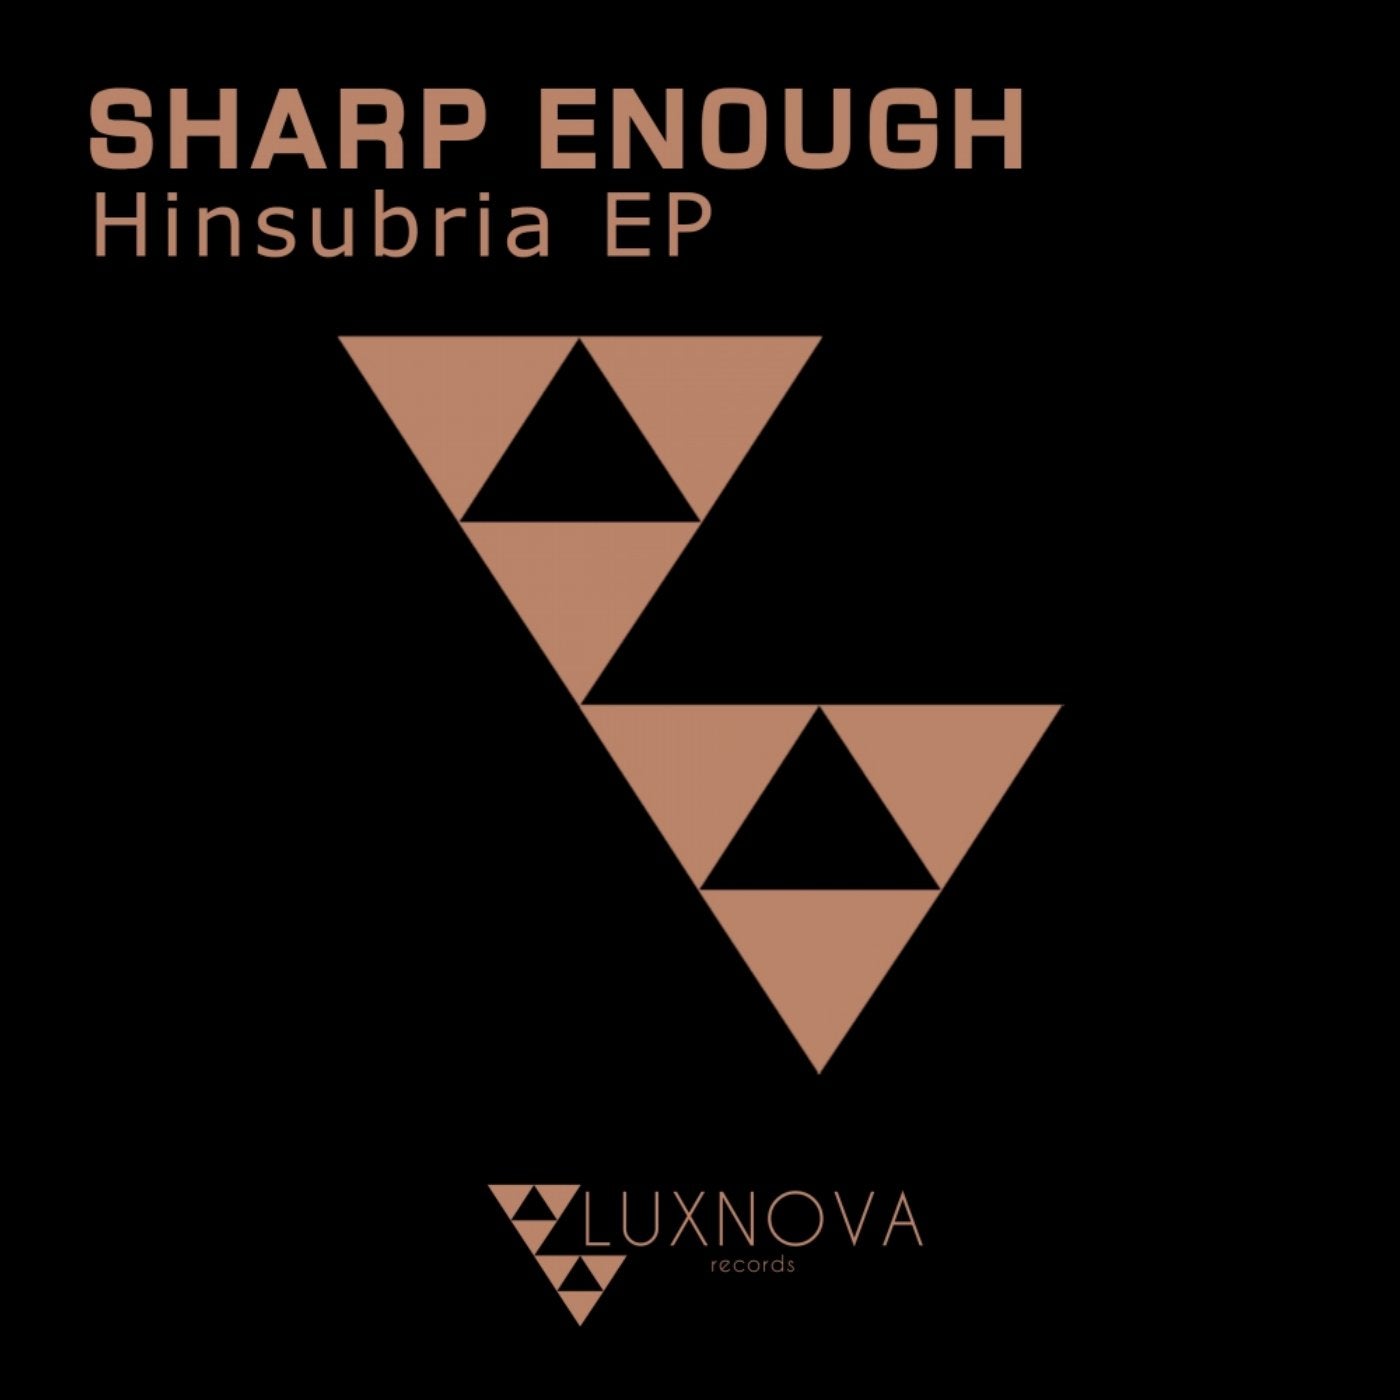 Hinsubria EP